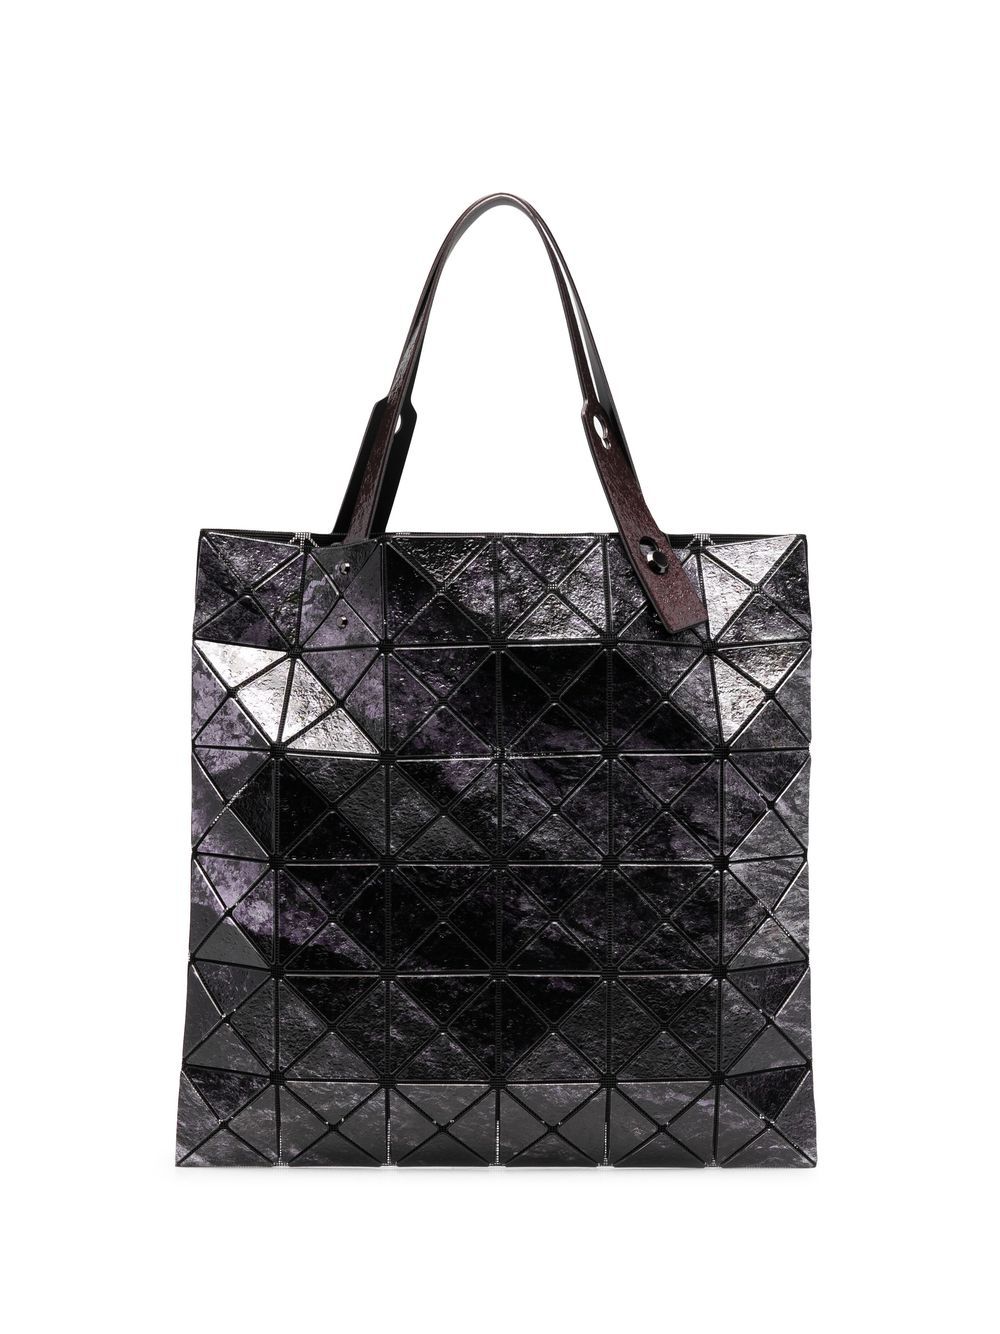 Bao Bao Issey Miyake geometric tote bag - Black von Bao Bao Issey Miyake